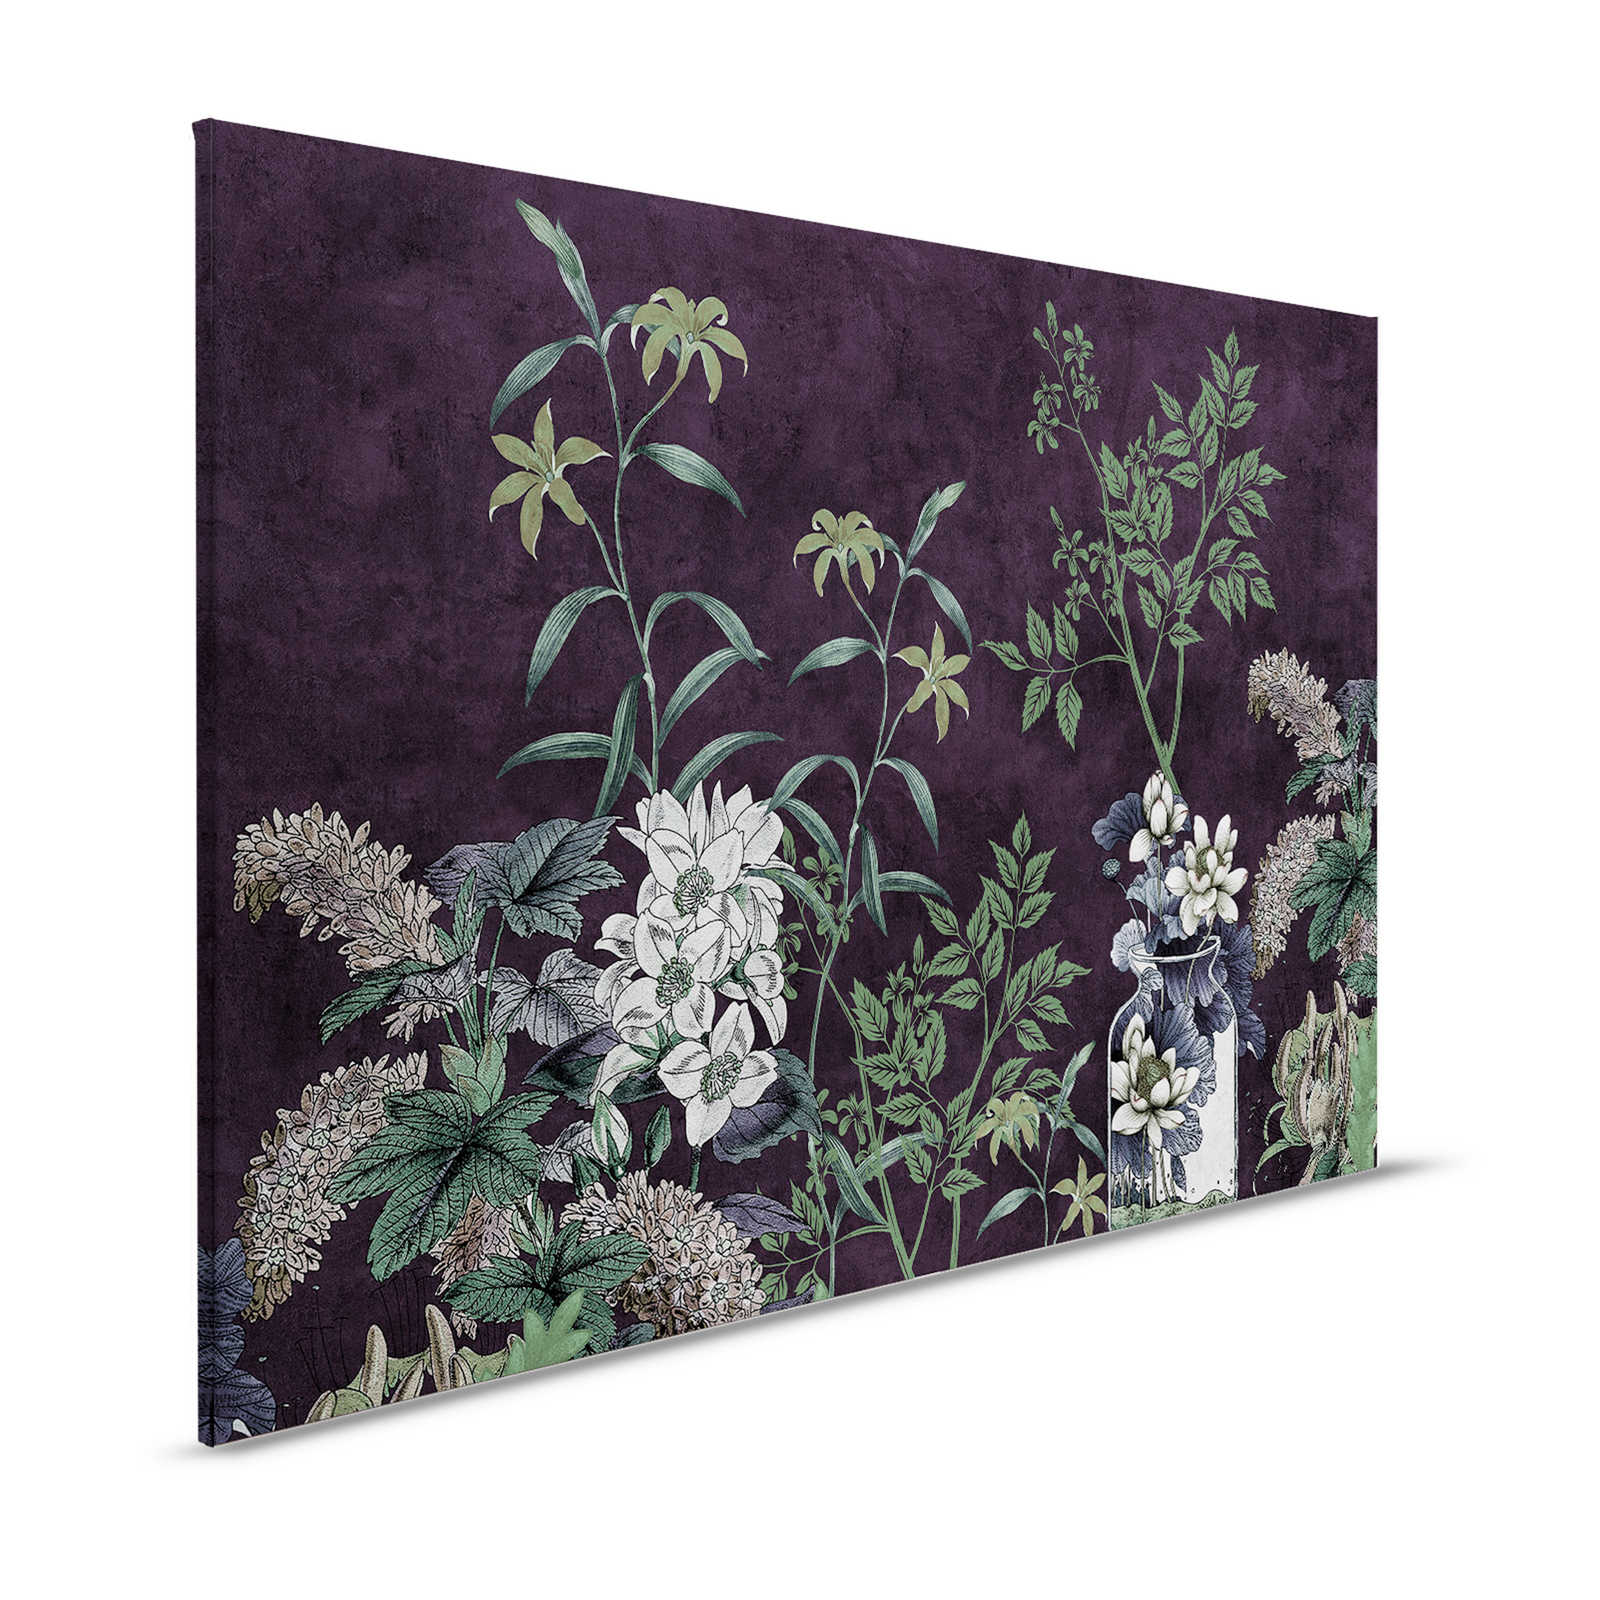 Dark Room 1 - Zwart Canvas Schilderij Botanisch Patroon Groen - 1.20 m x 0.80 m
